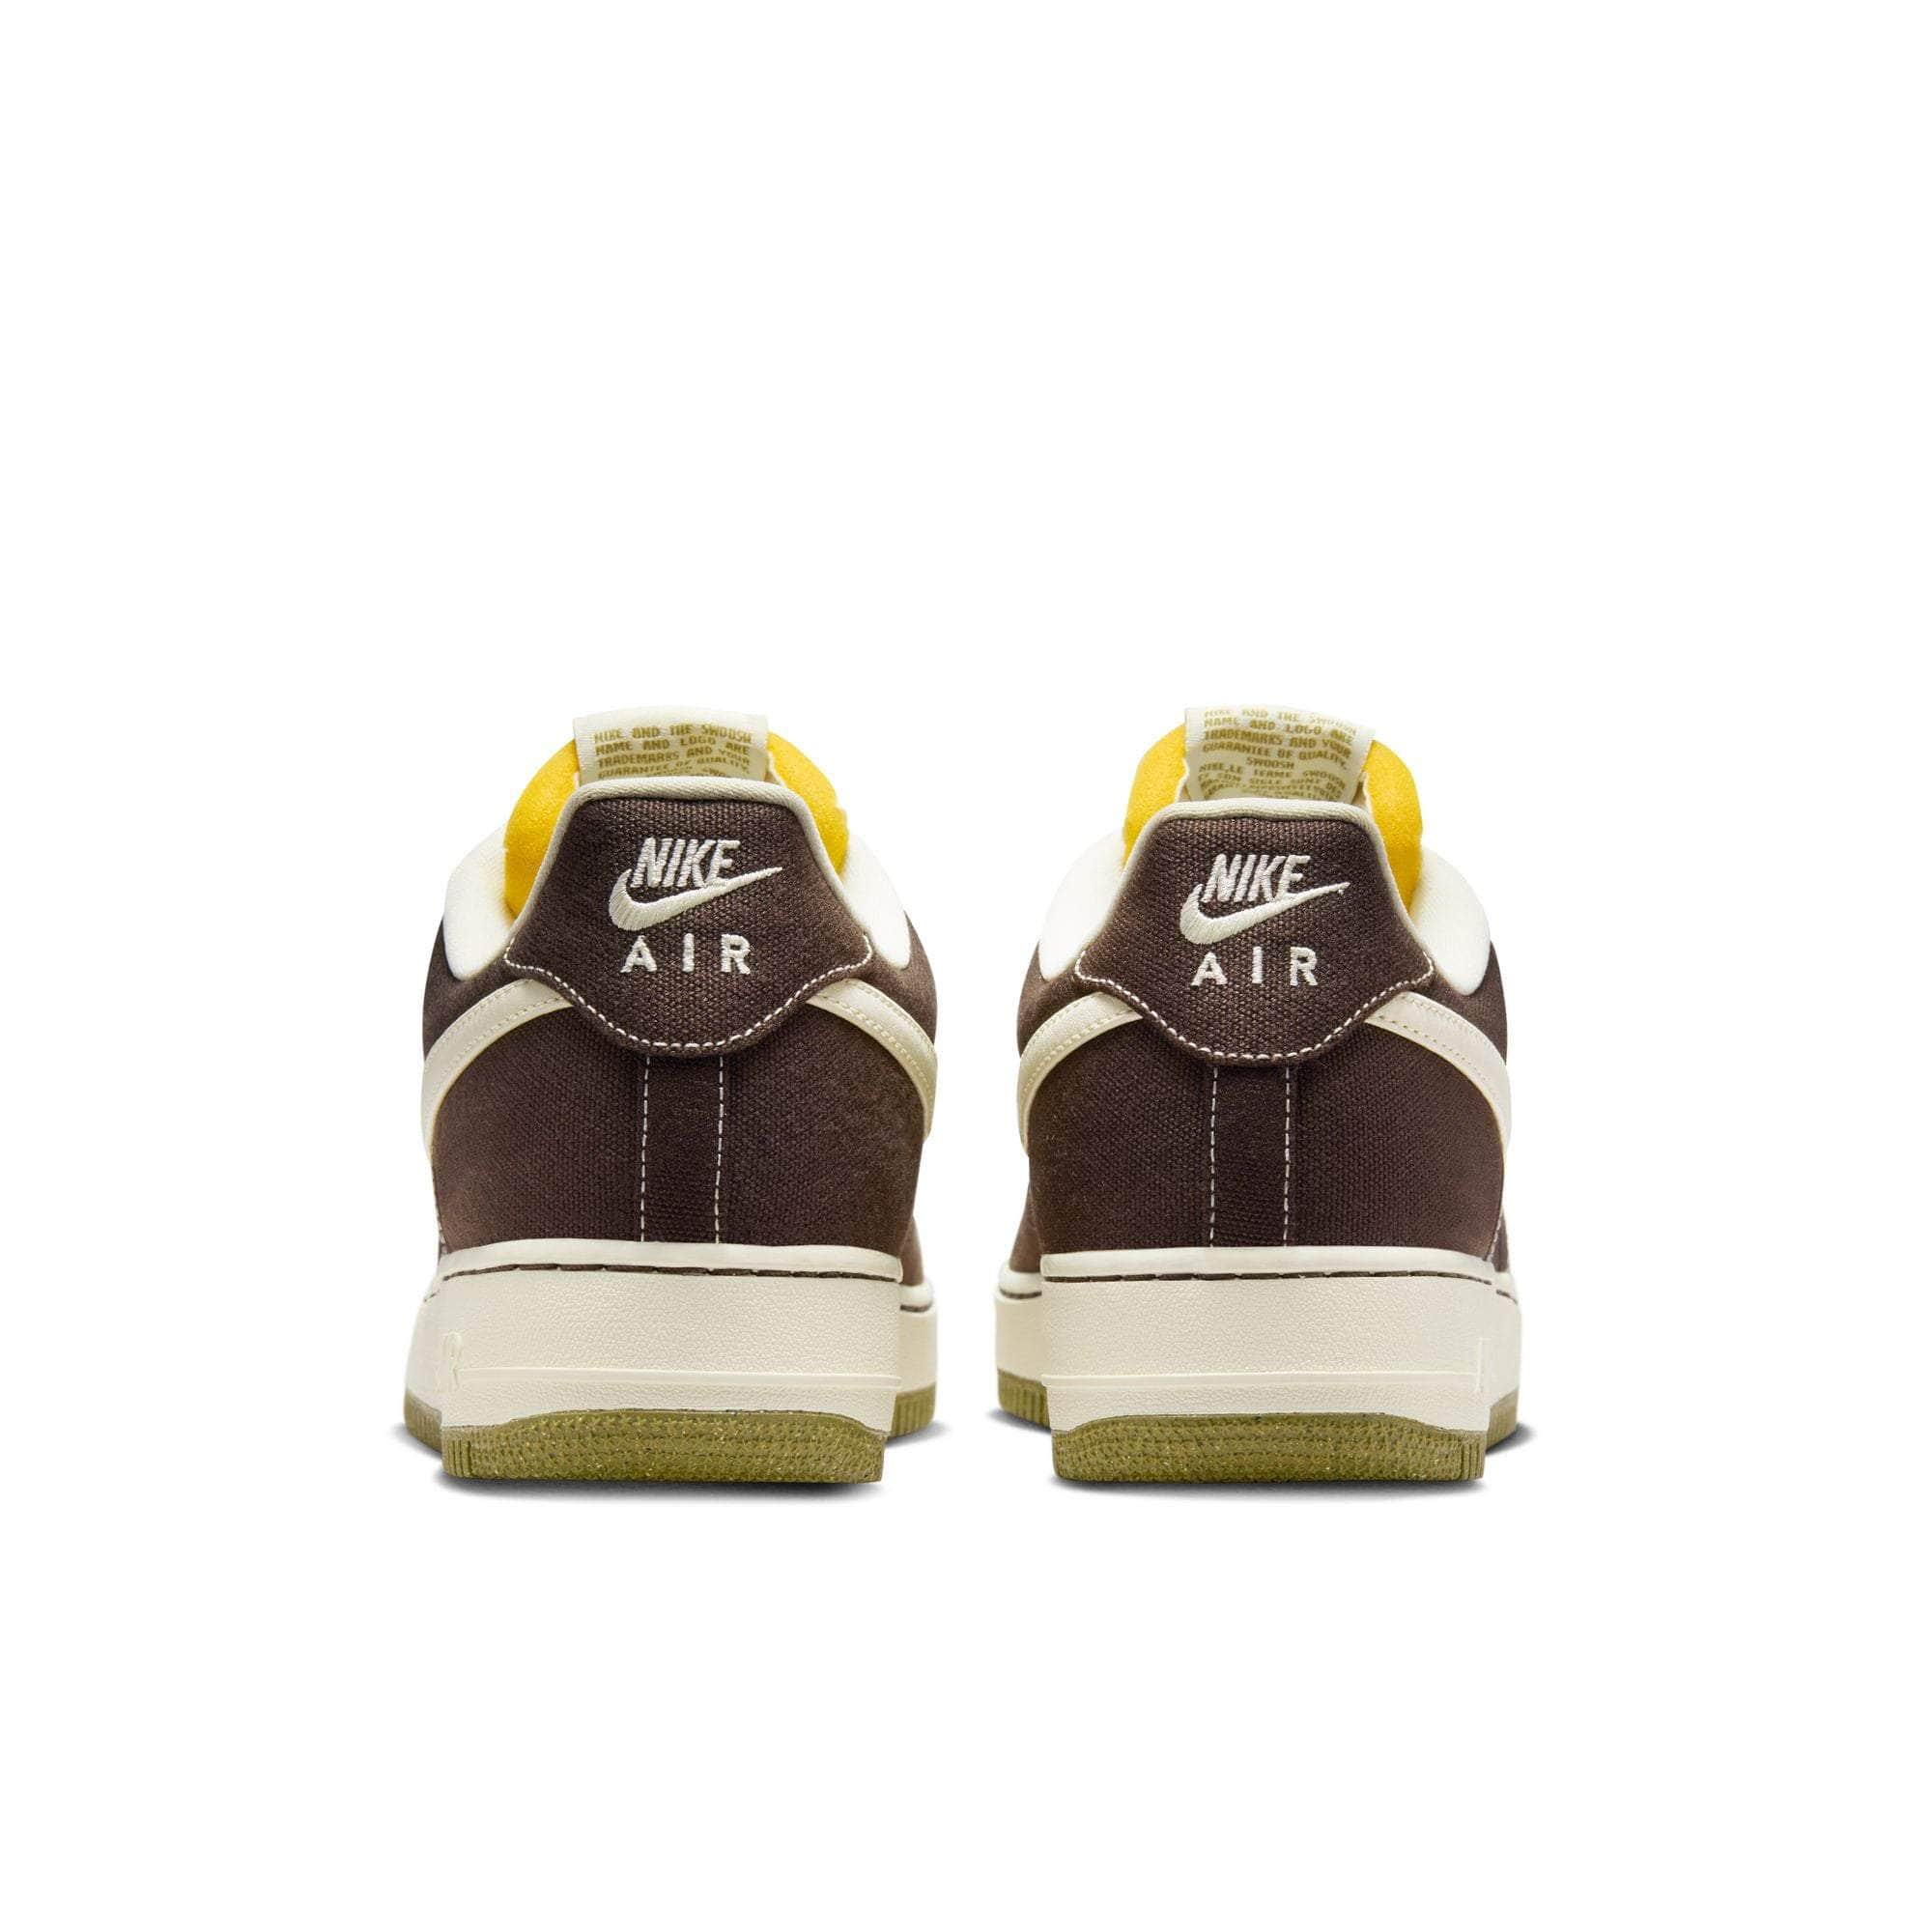 Nike FOOTWEAR Nike Air Force 1 '07 Premium “Baroque Brown” - Men's